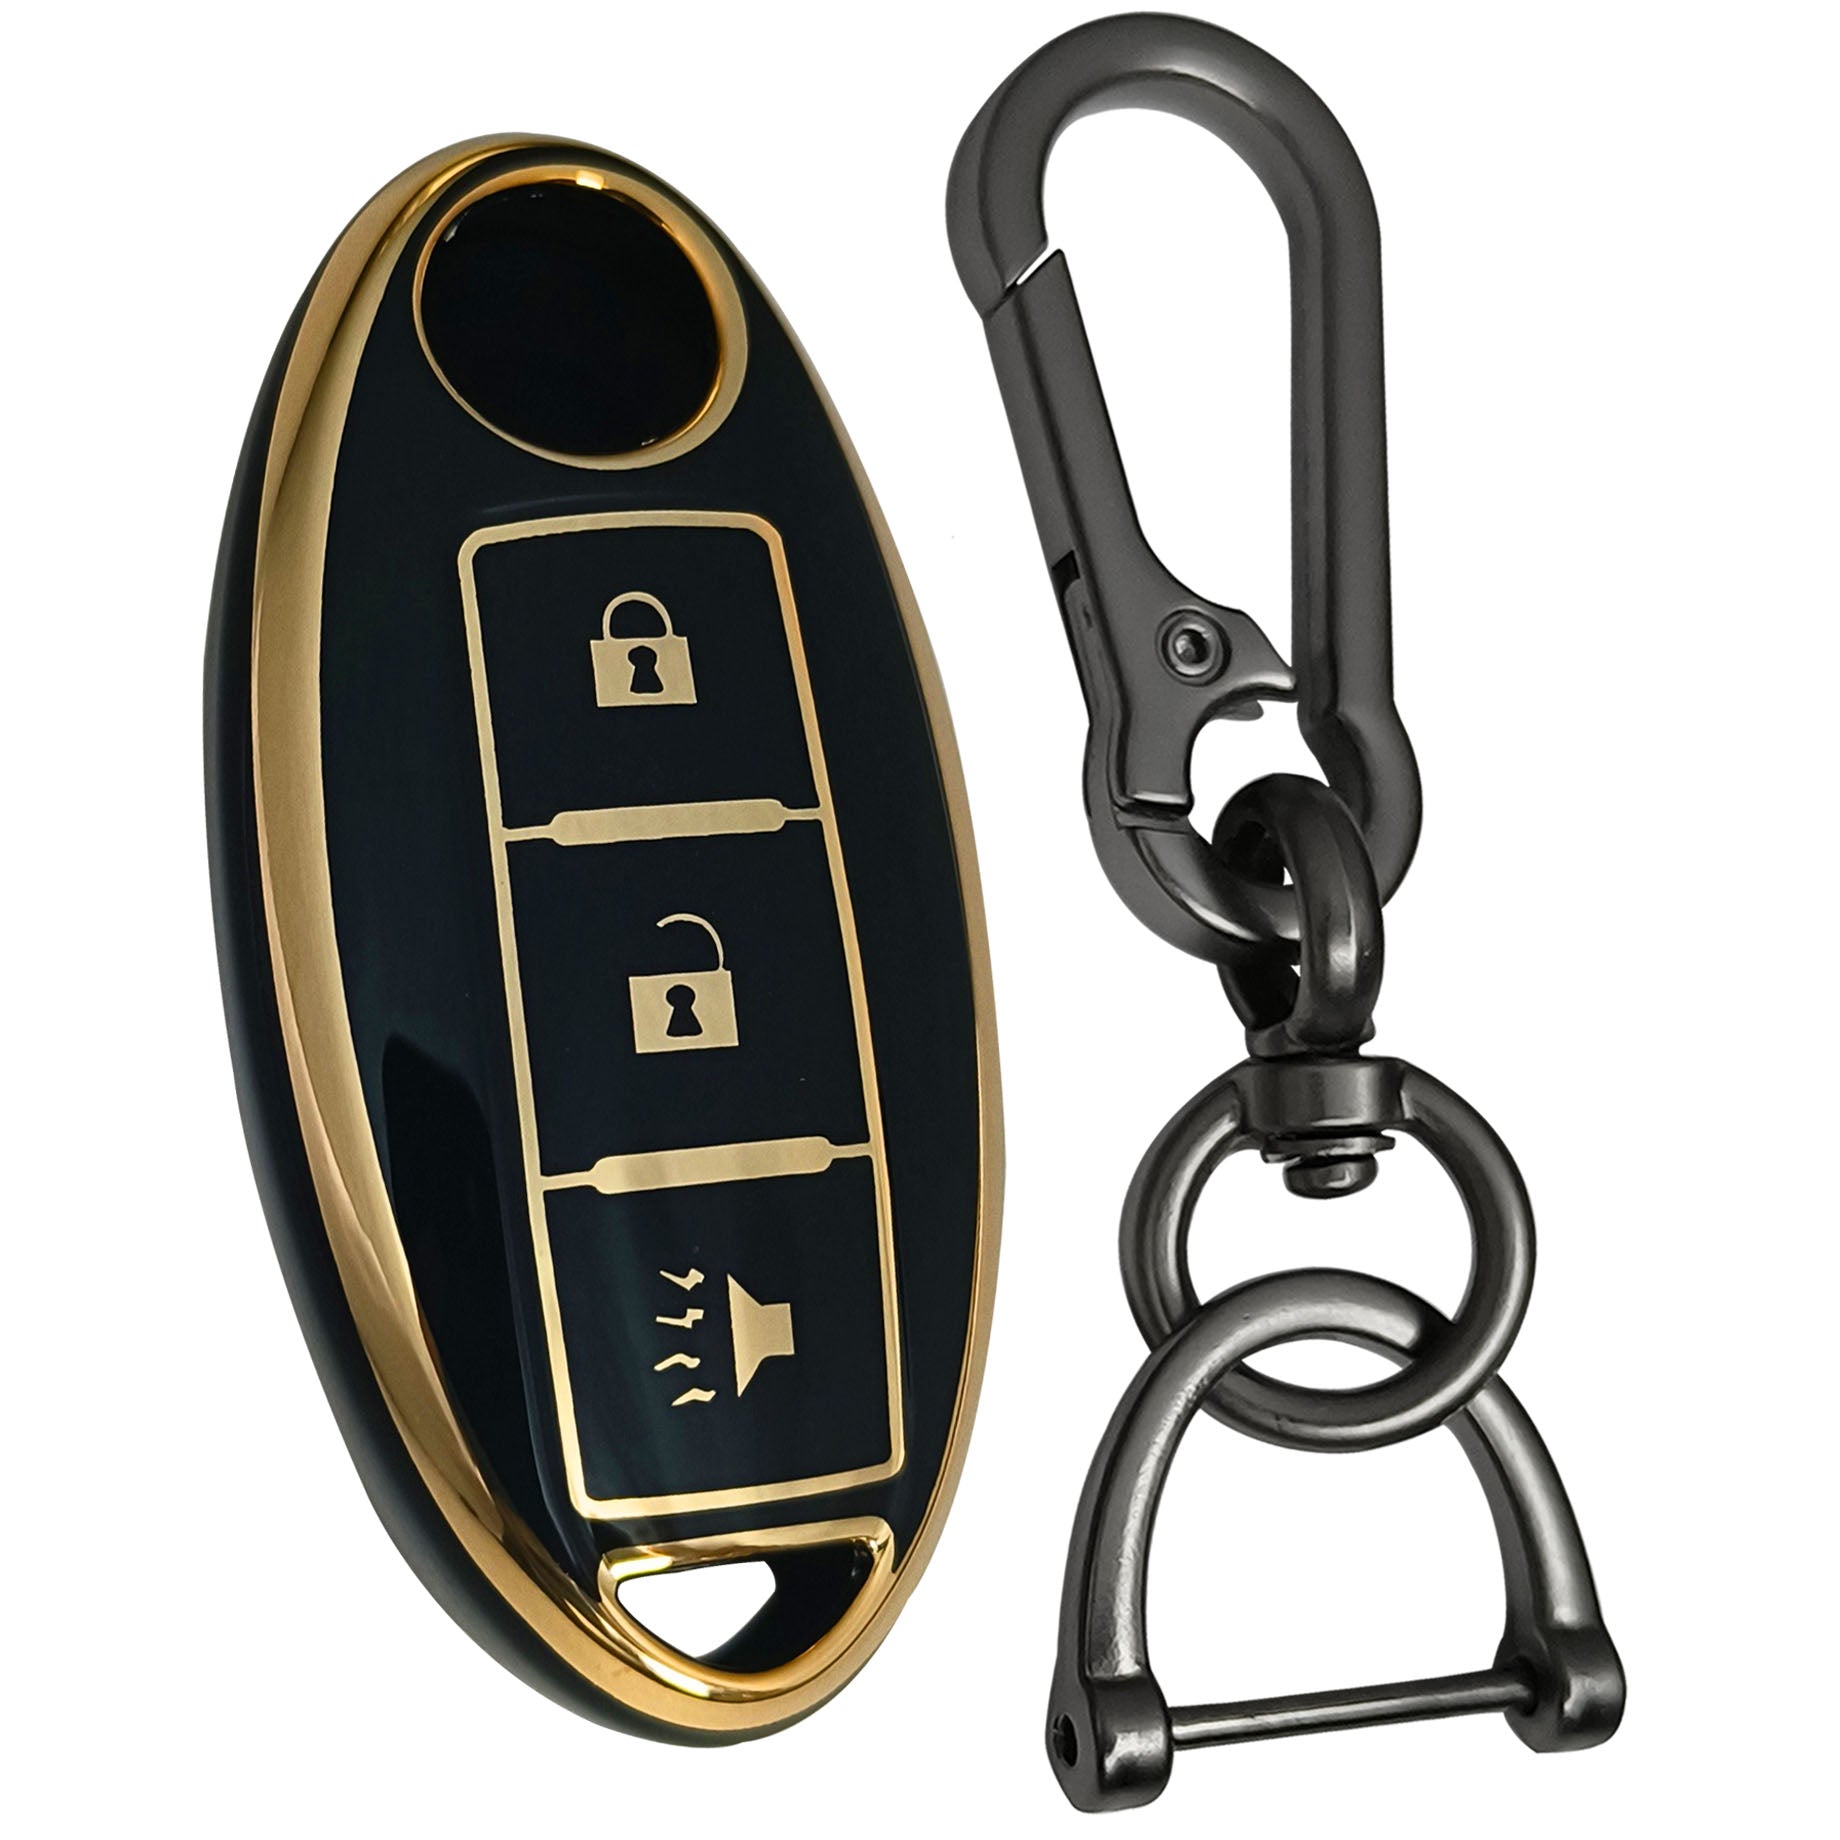 nissan micra sunny teana magnite 3 button smart key keychain black gold